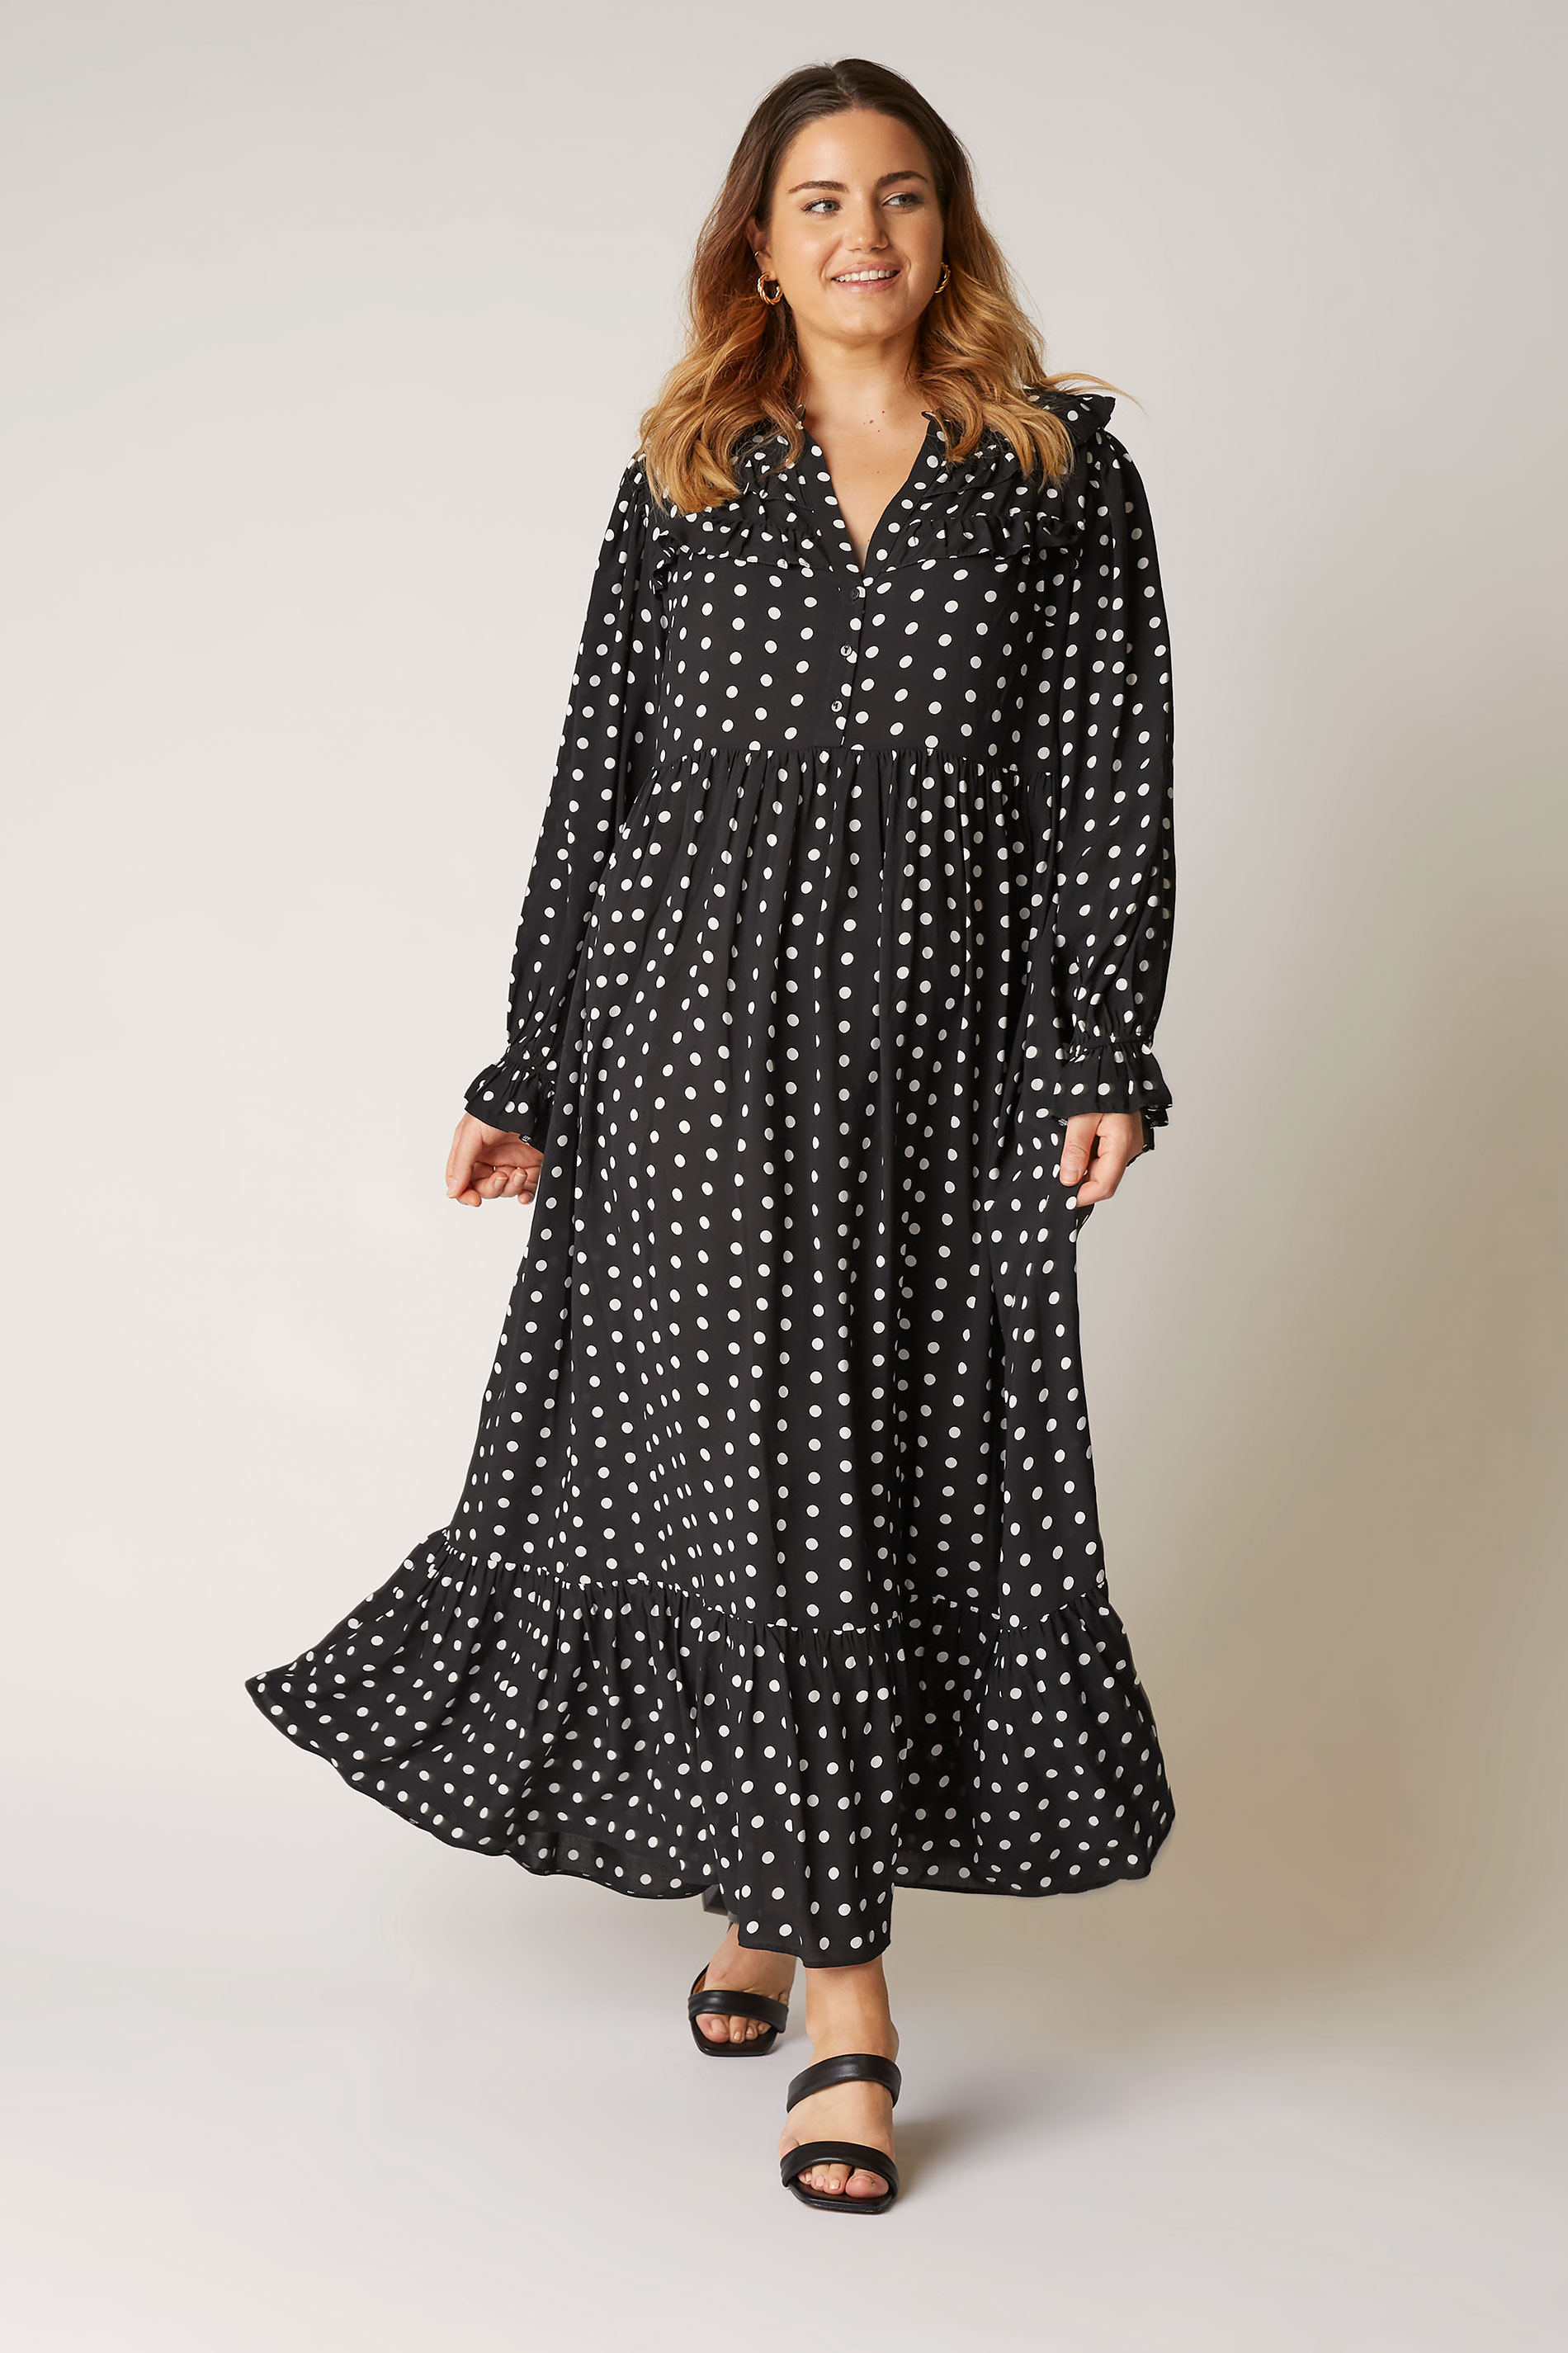 THE LIMITED EDIT Black Polka Dot Frill Smock Maxi Dress